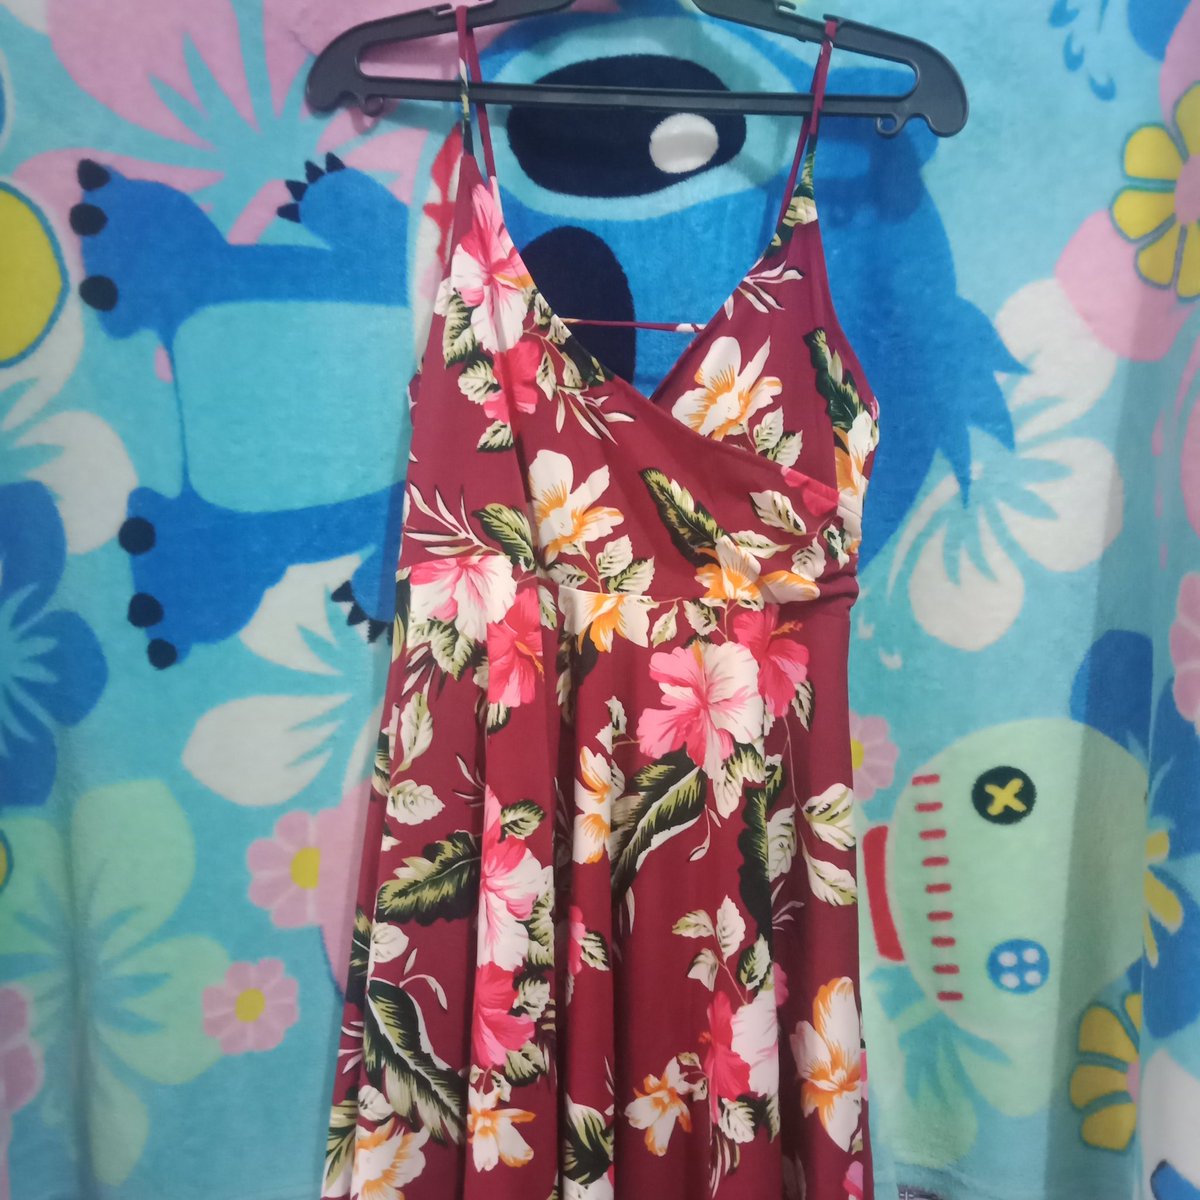 Floral dress (flowy haha)400 pesos